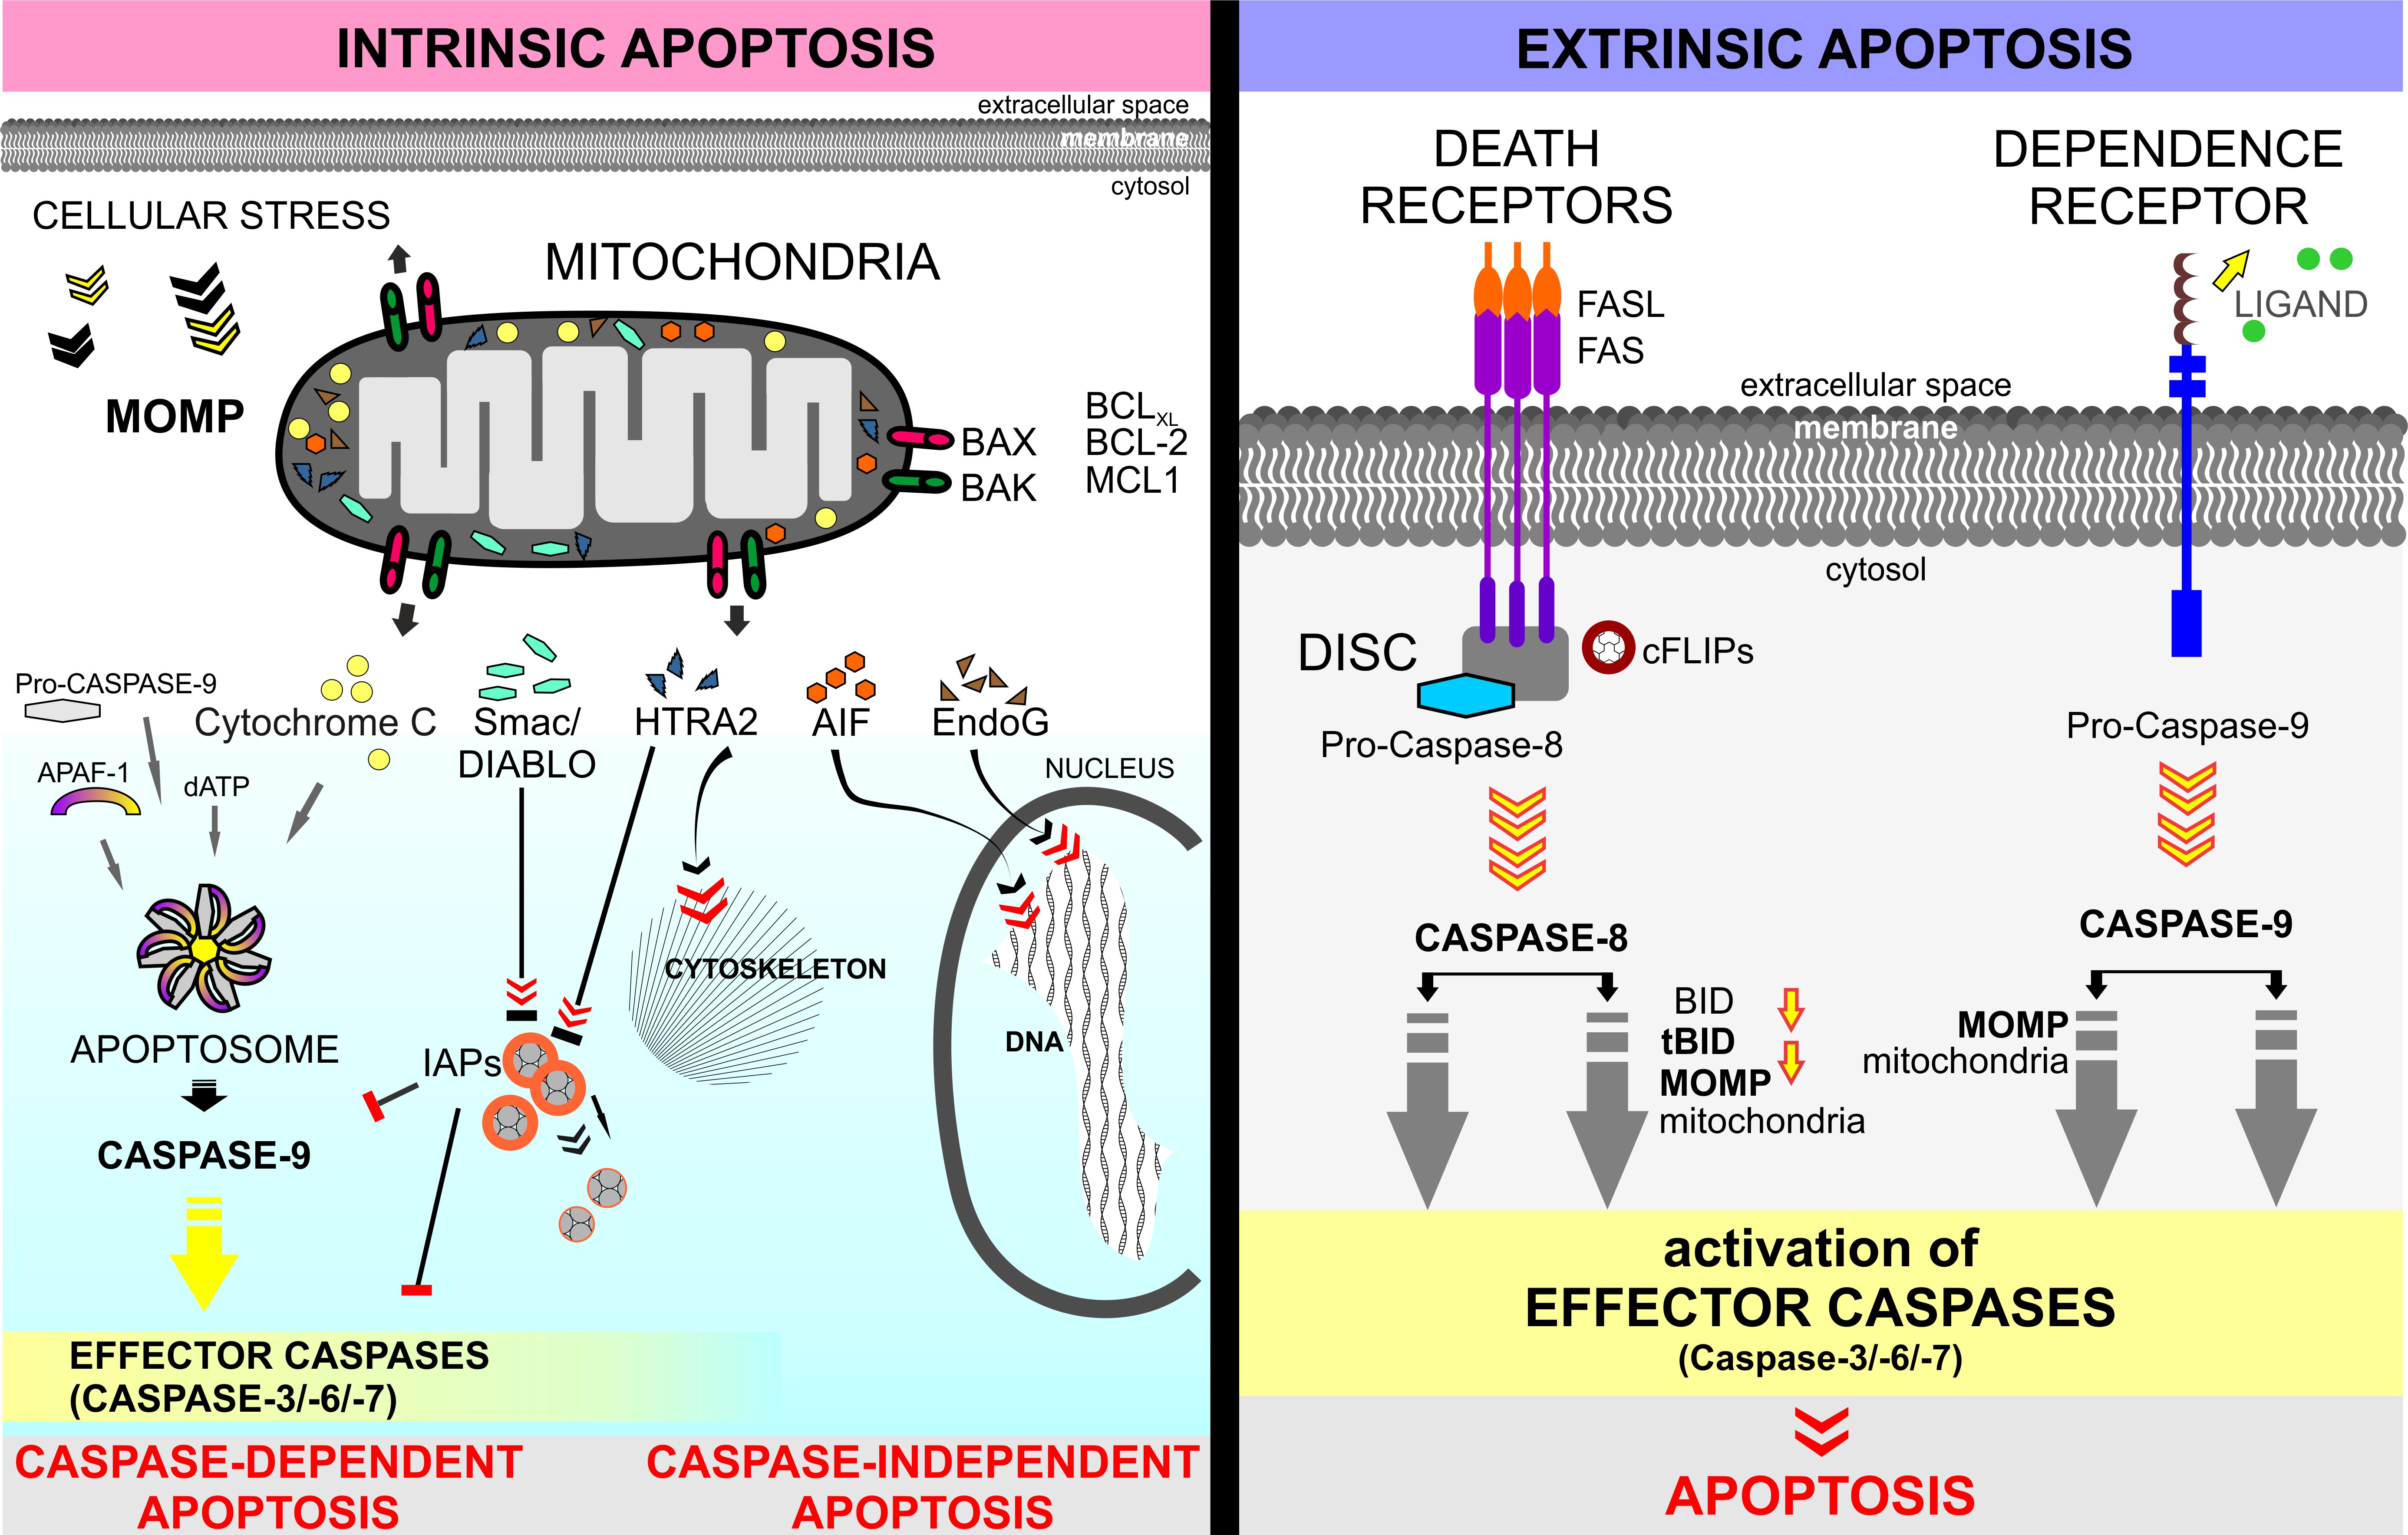 Inductors of apoptosis | Algatech